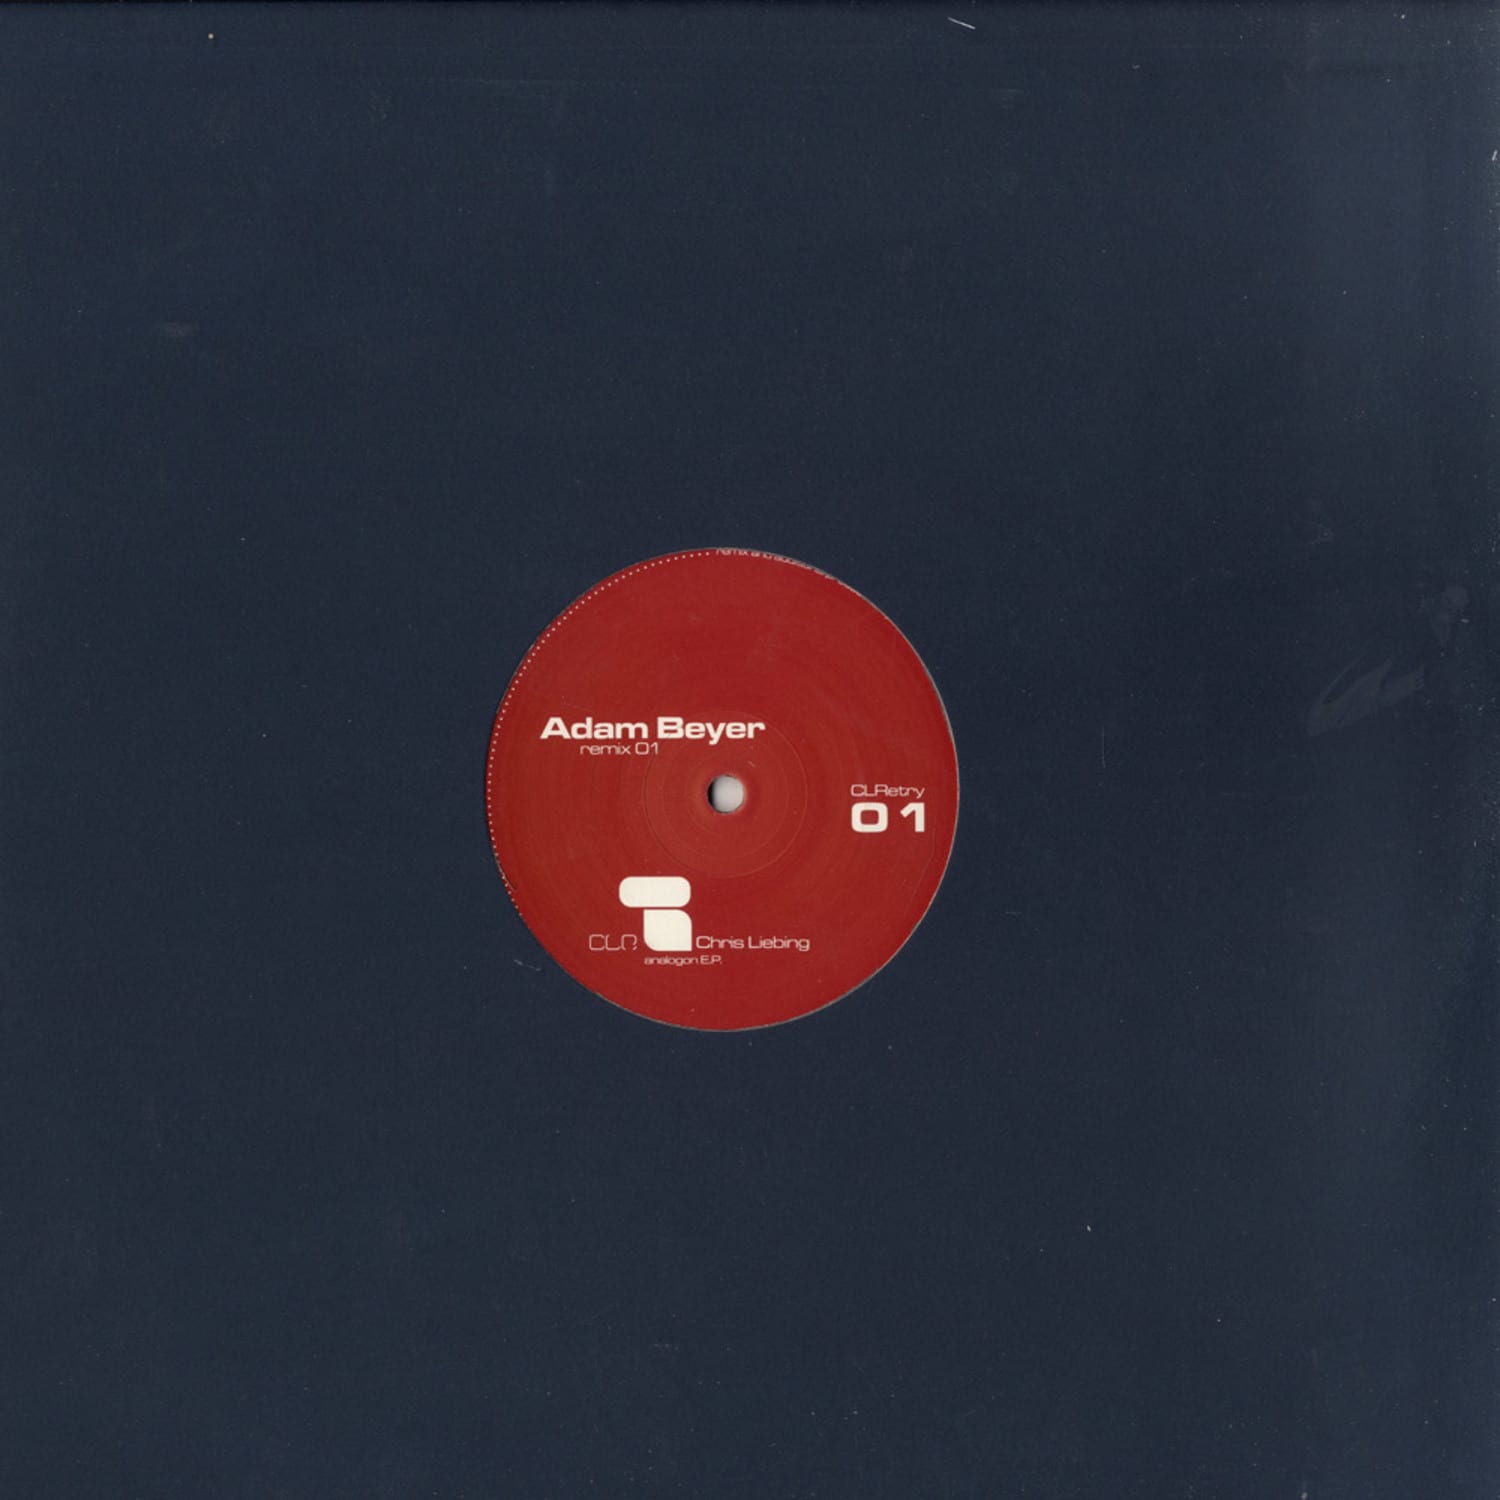 Chris Liebing - ANALOGON EP / REMIXES BY ADAM BEYER & G PARISIO